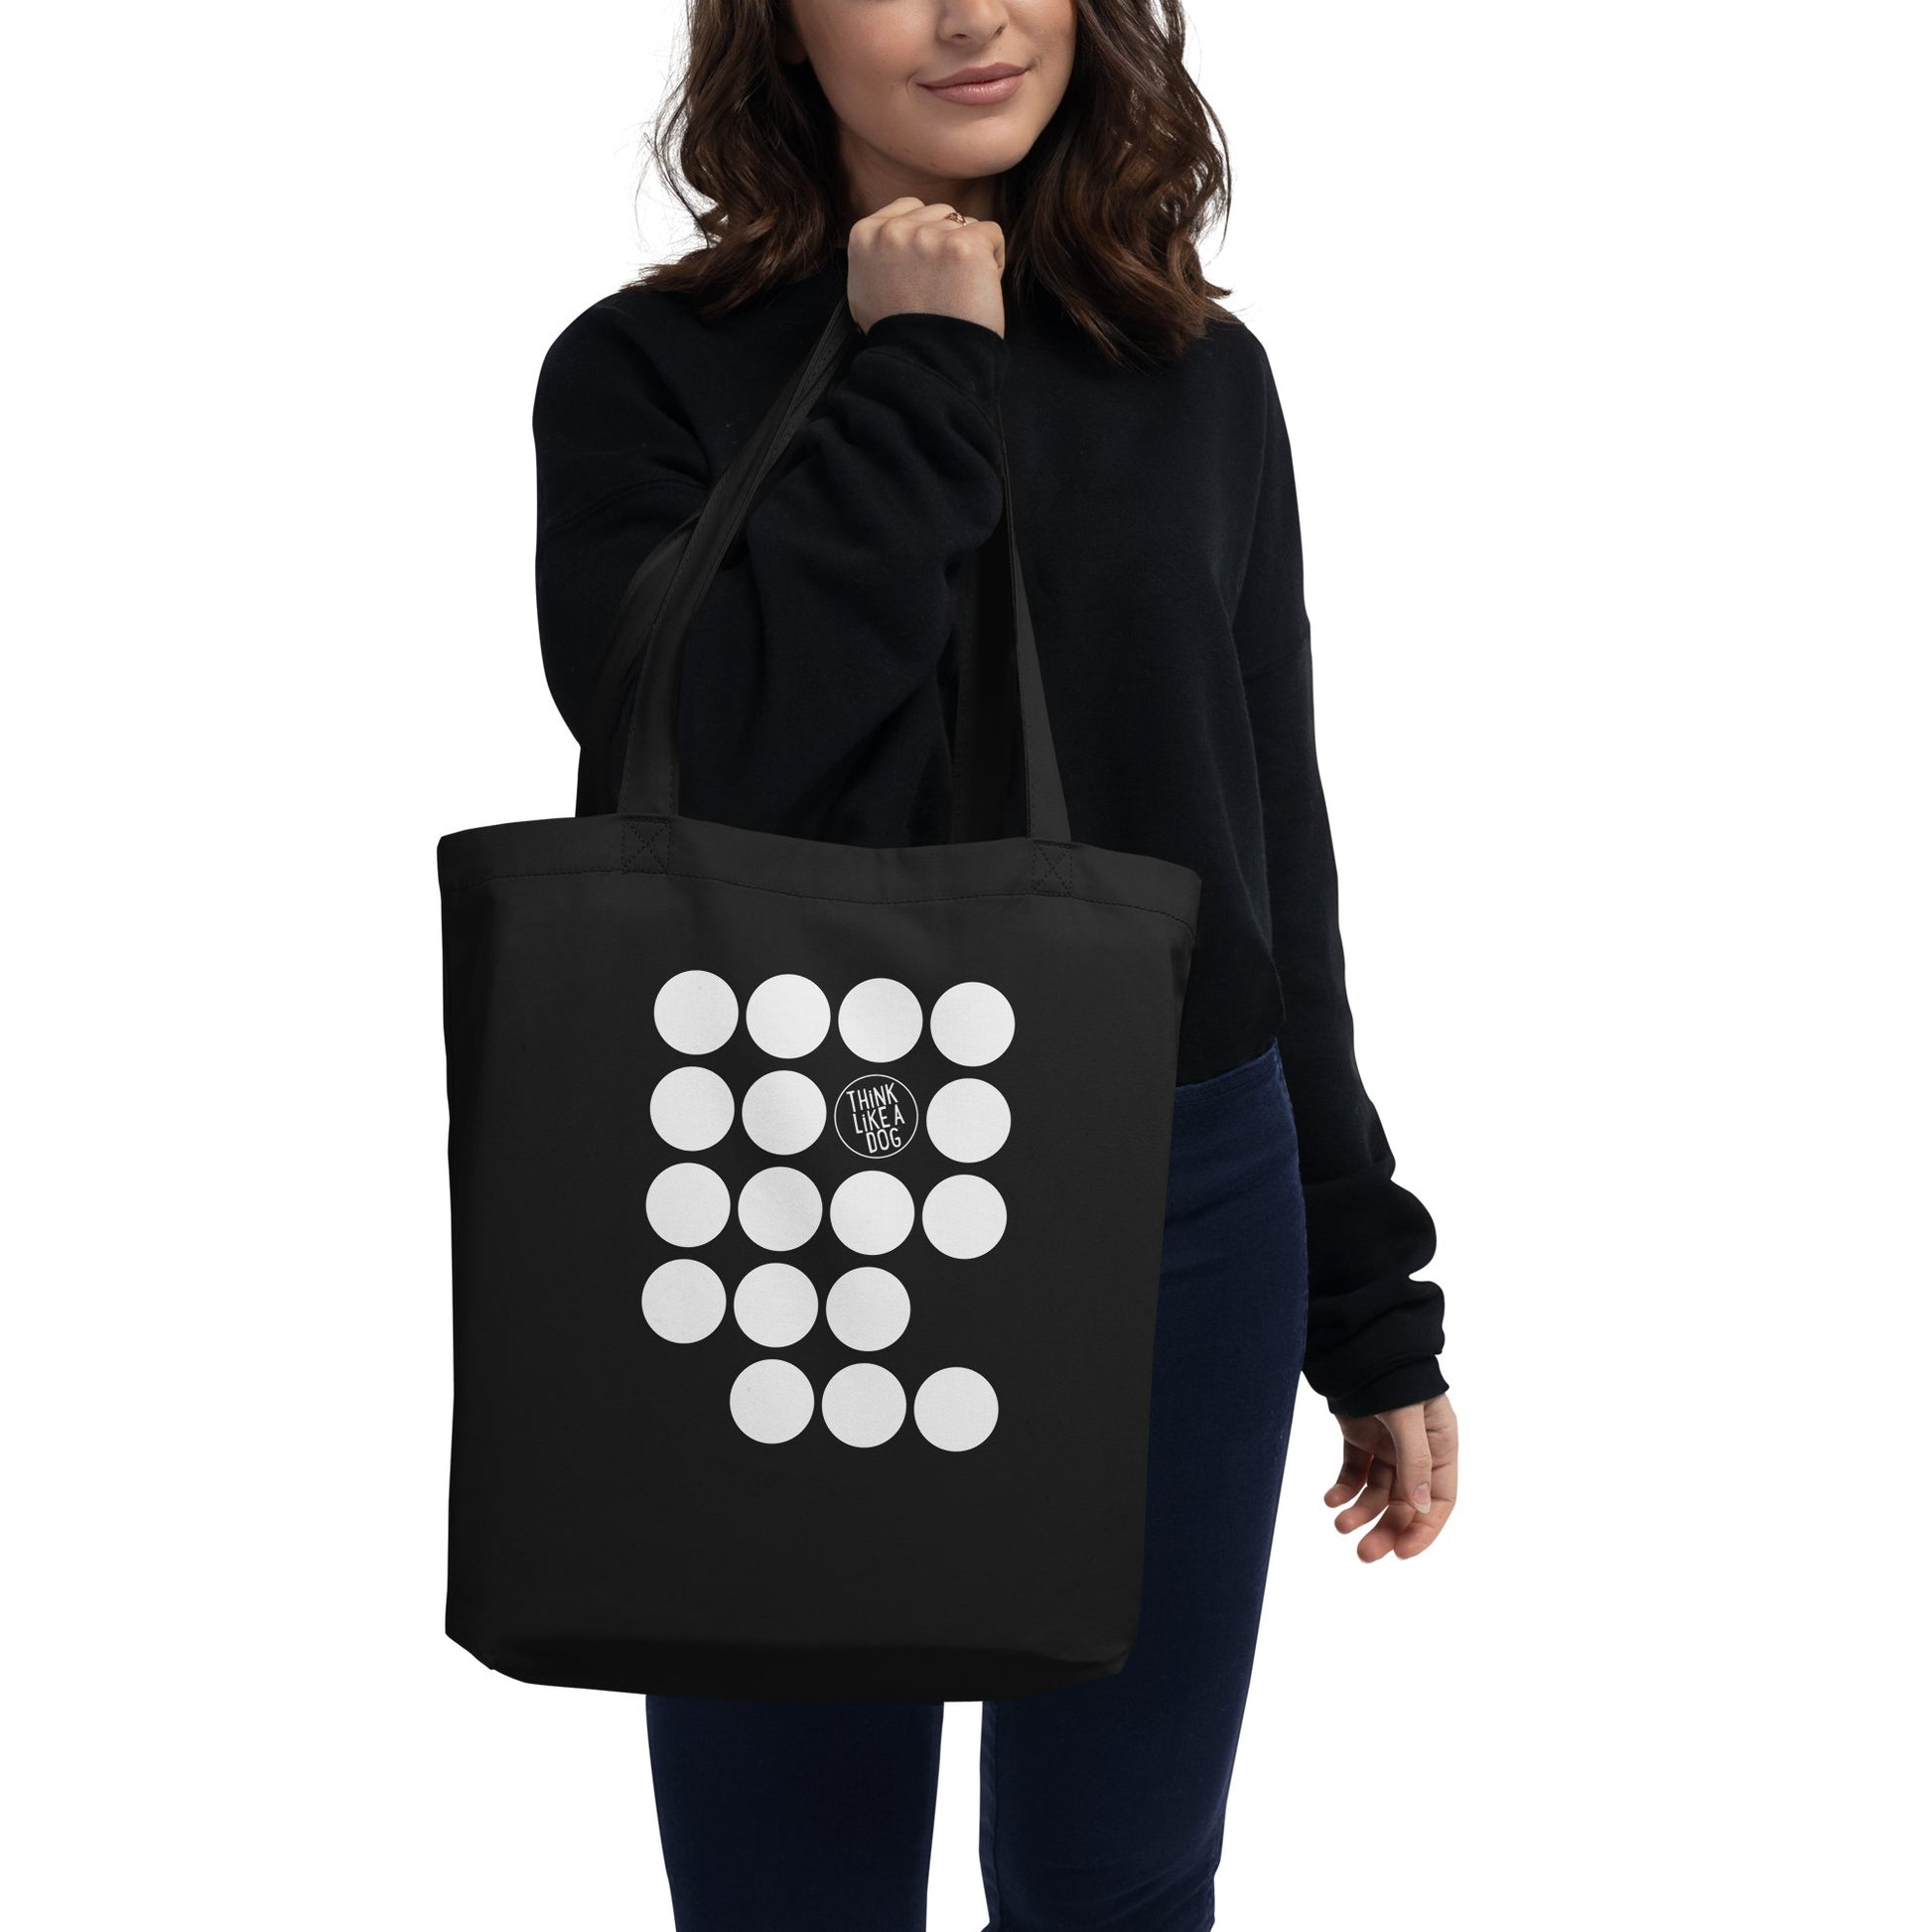 Black Eco Tote Bag with White Spots Logo - THiNK LiKE A DOG®